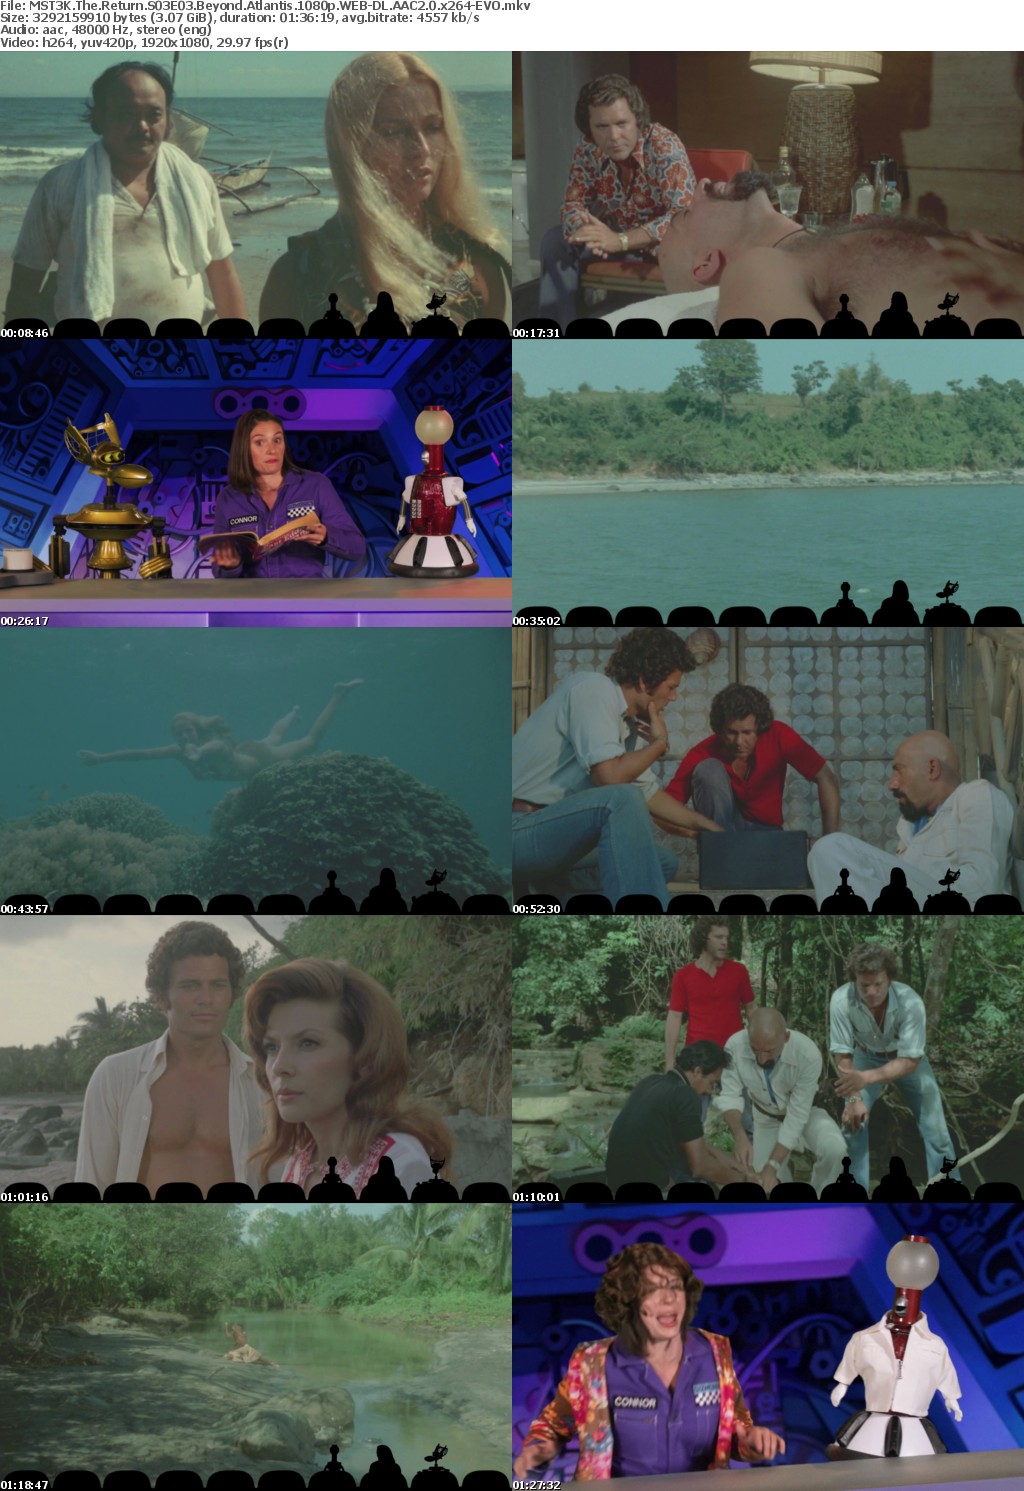 MST3K The Return S03E03 Beyond Atlantis 1080p WEB-DL AAC2 0 x264-EVO